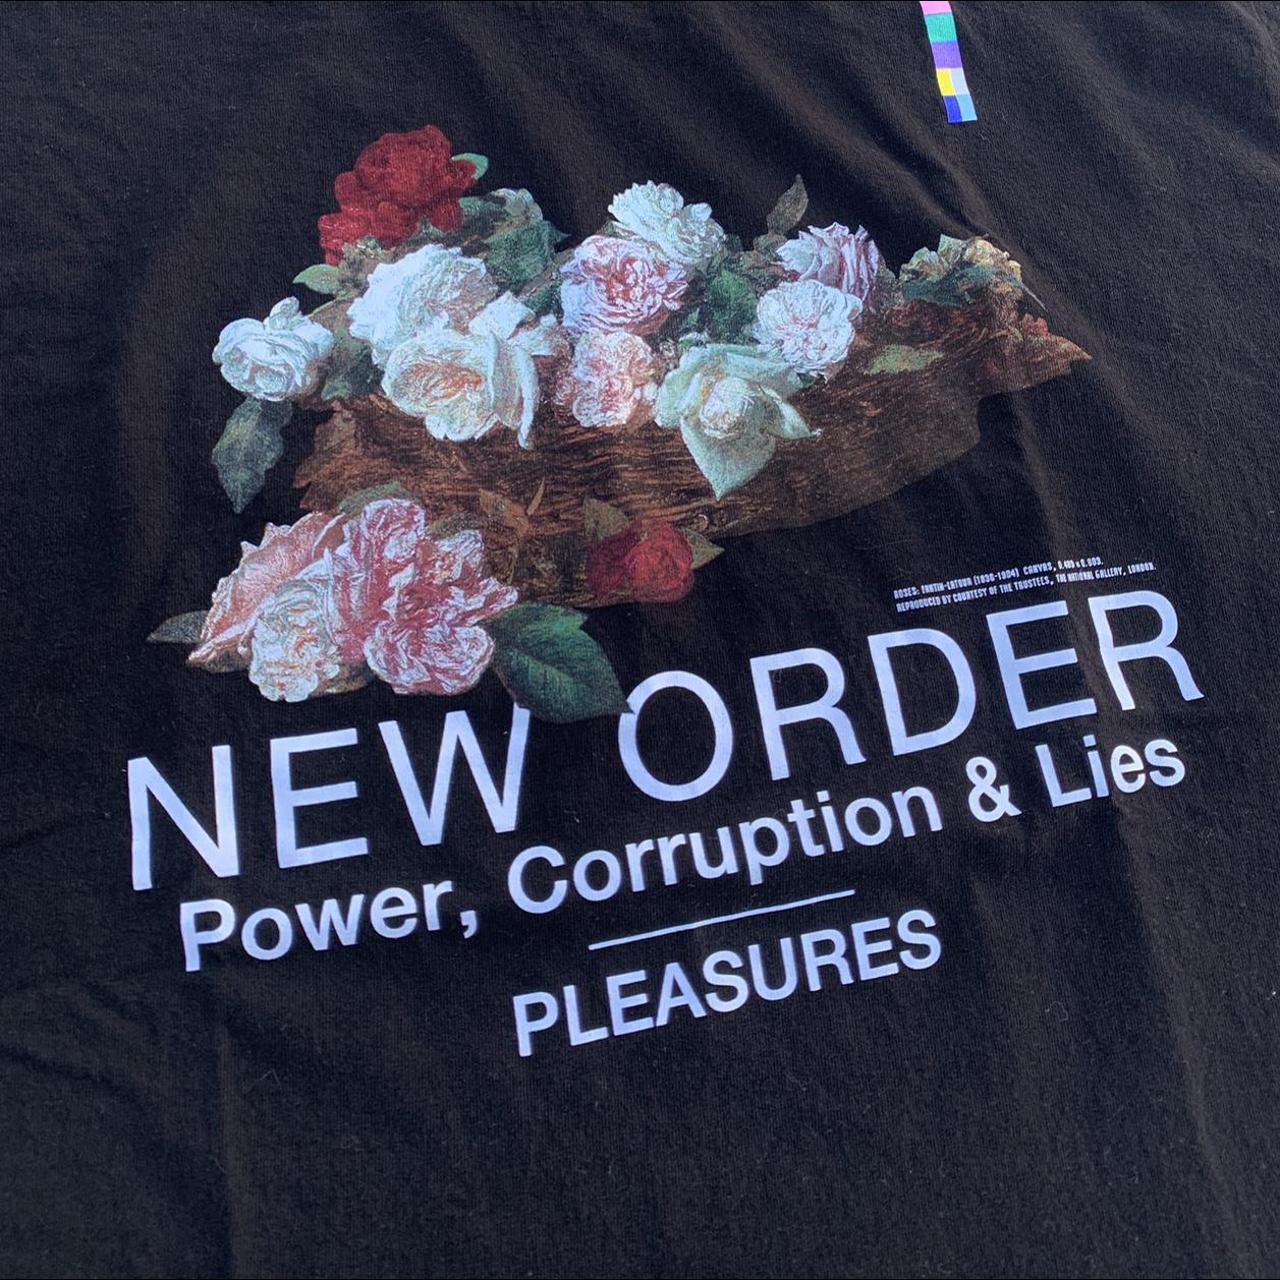 Product Image 4 - Pleasures New Order T-shirt
Power, Corruption